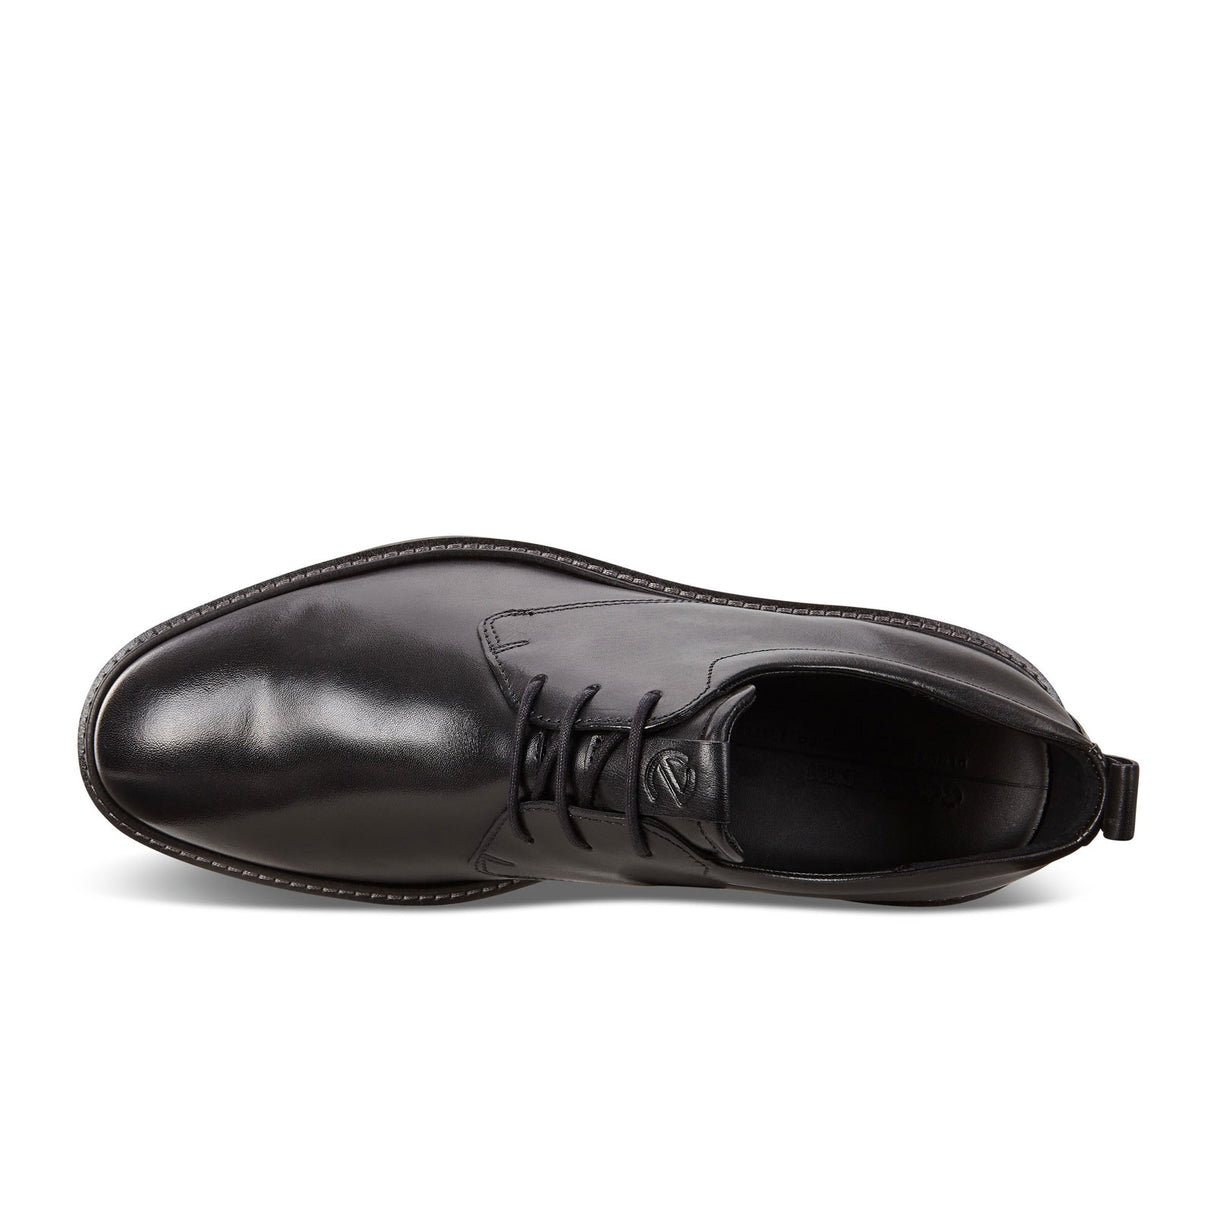 ECCO St. 1 Hybrid Plain Toe Oxford (Men) - Black Dress-Casual - Oxford - The Heel Shoe Fitters